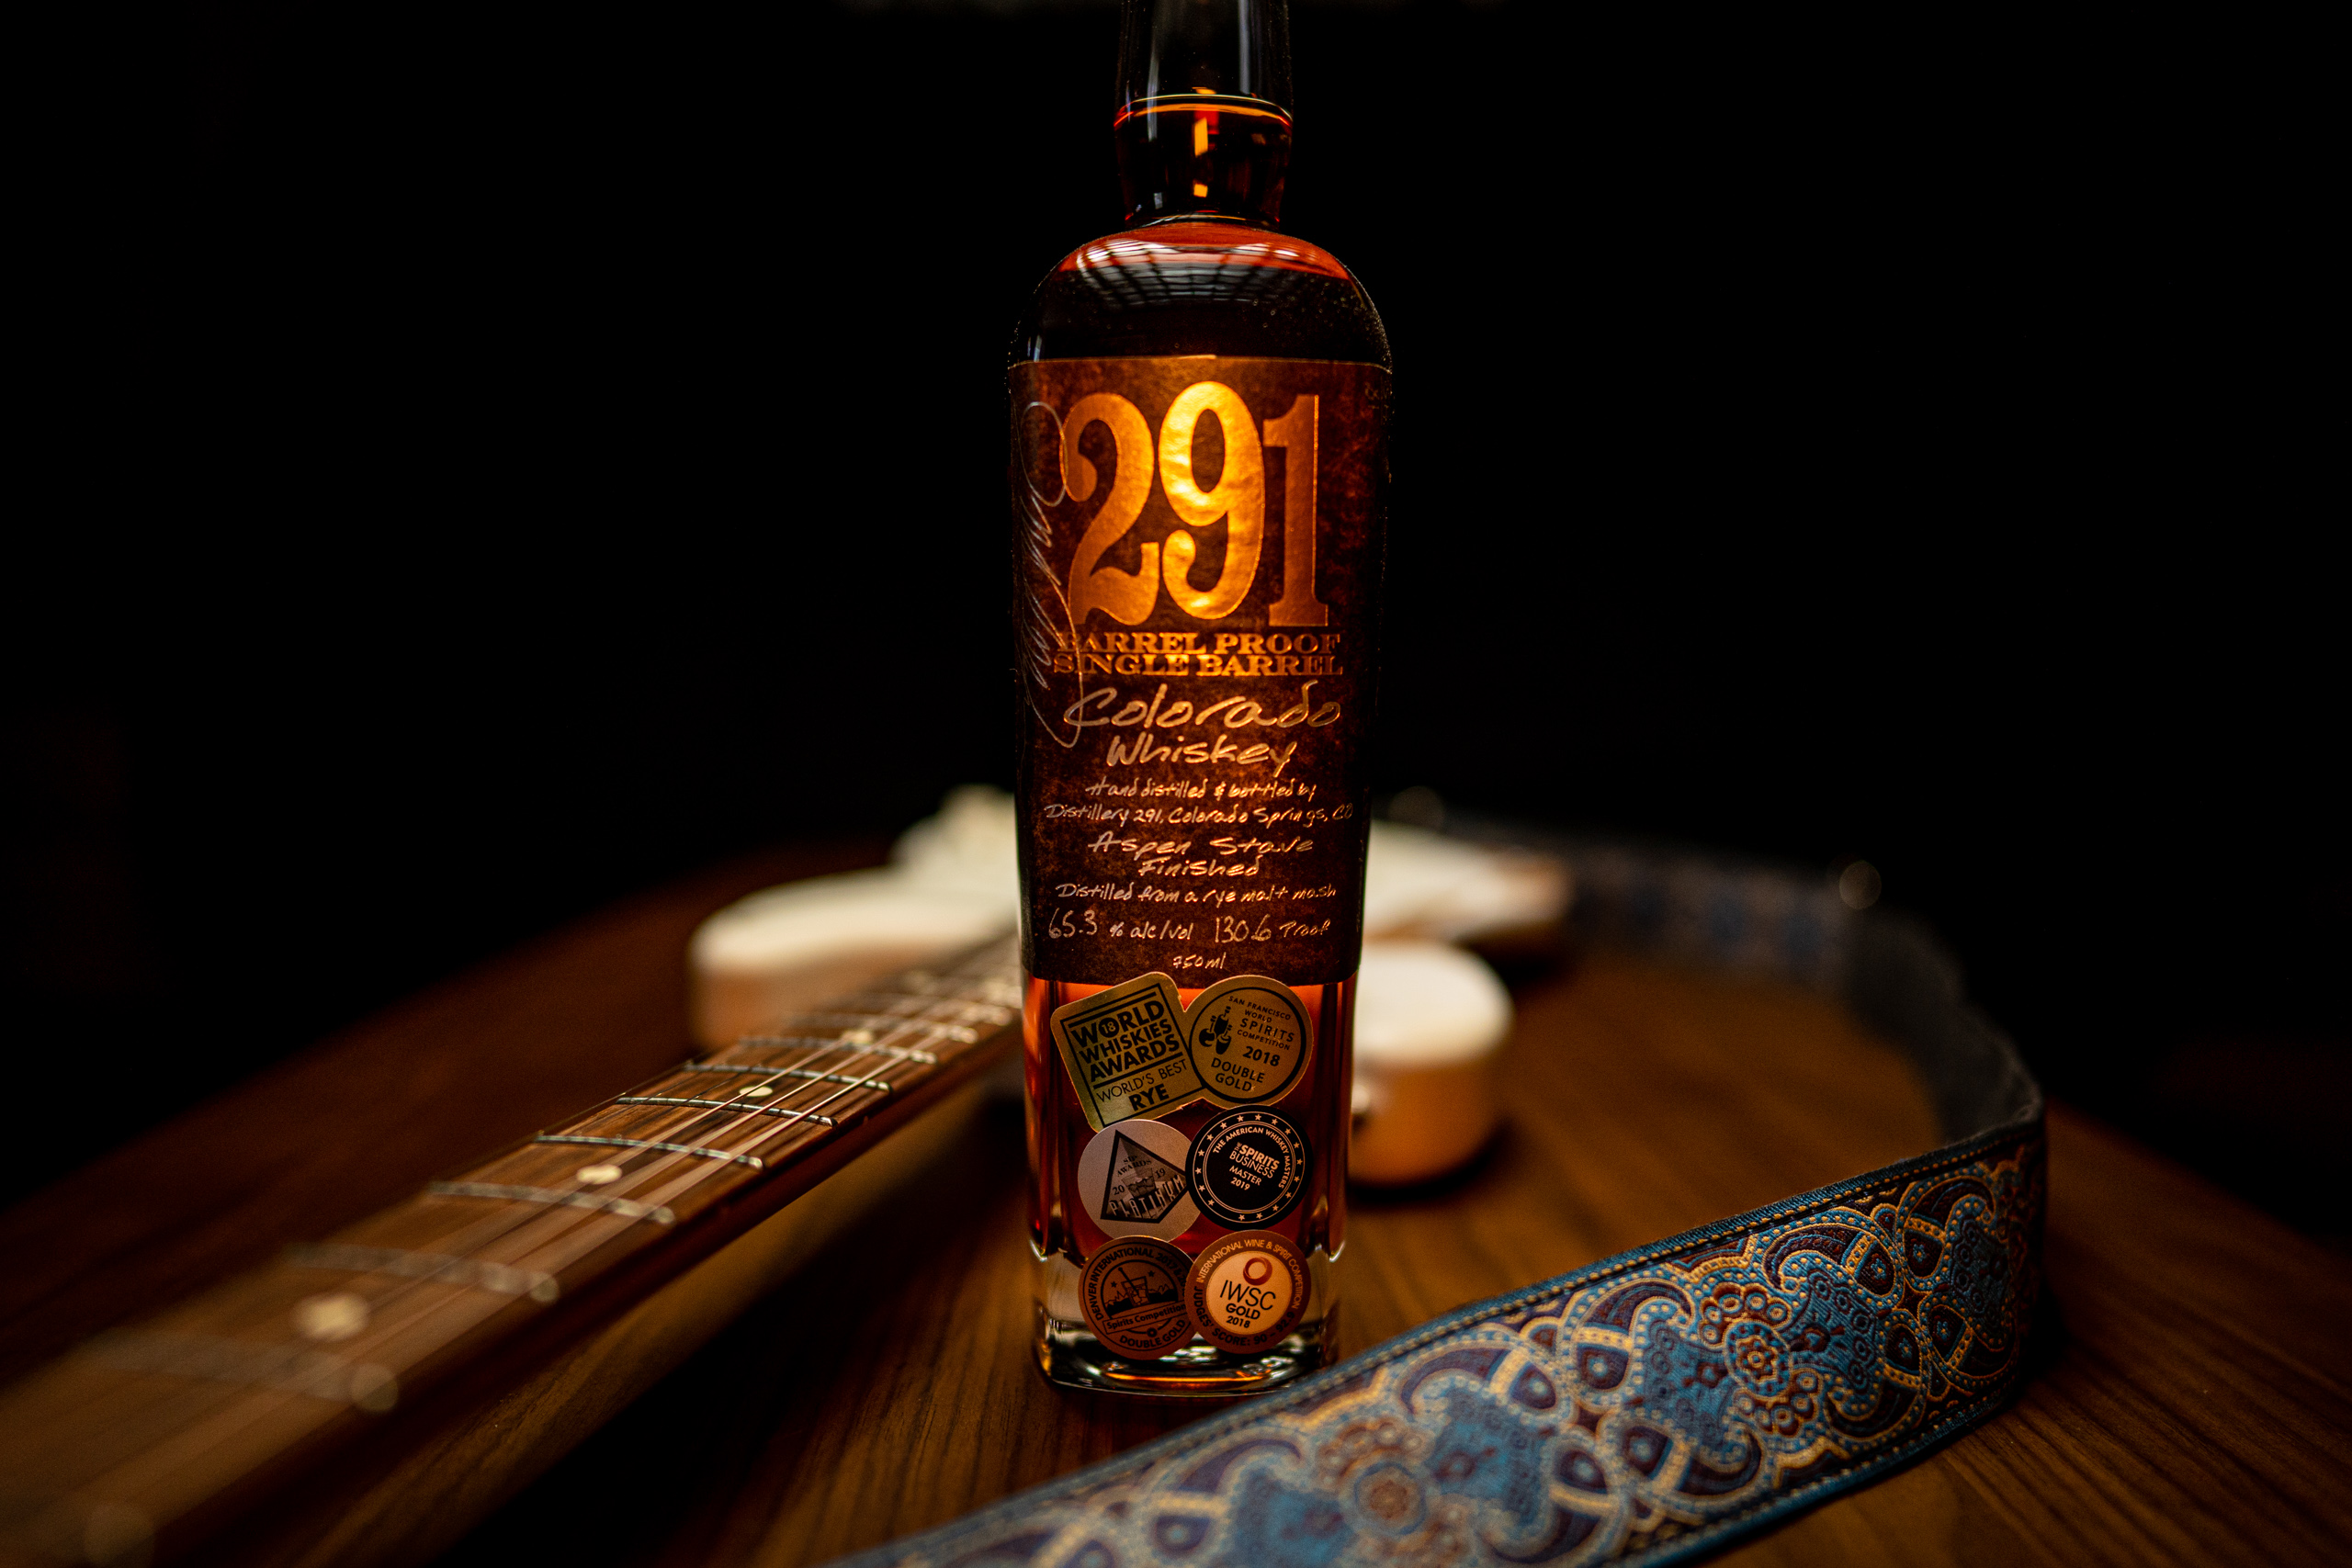 291 colorado whiskey